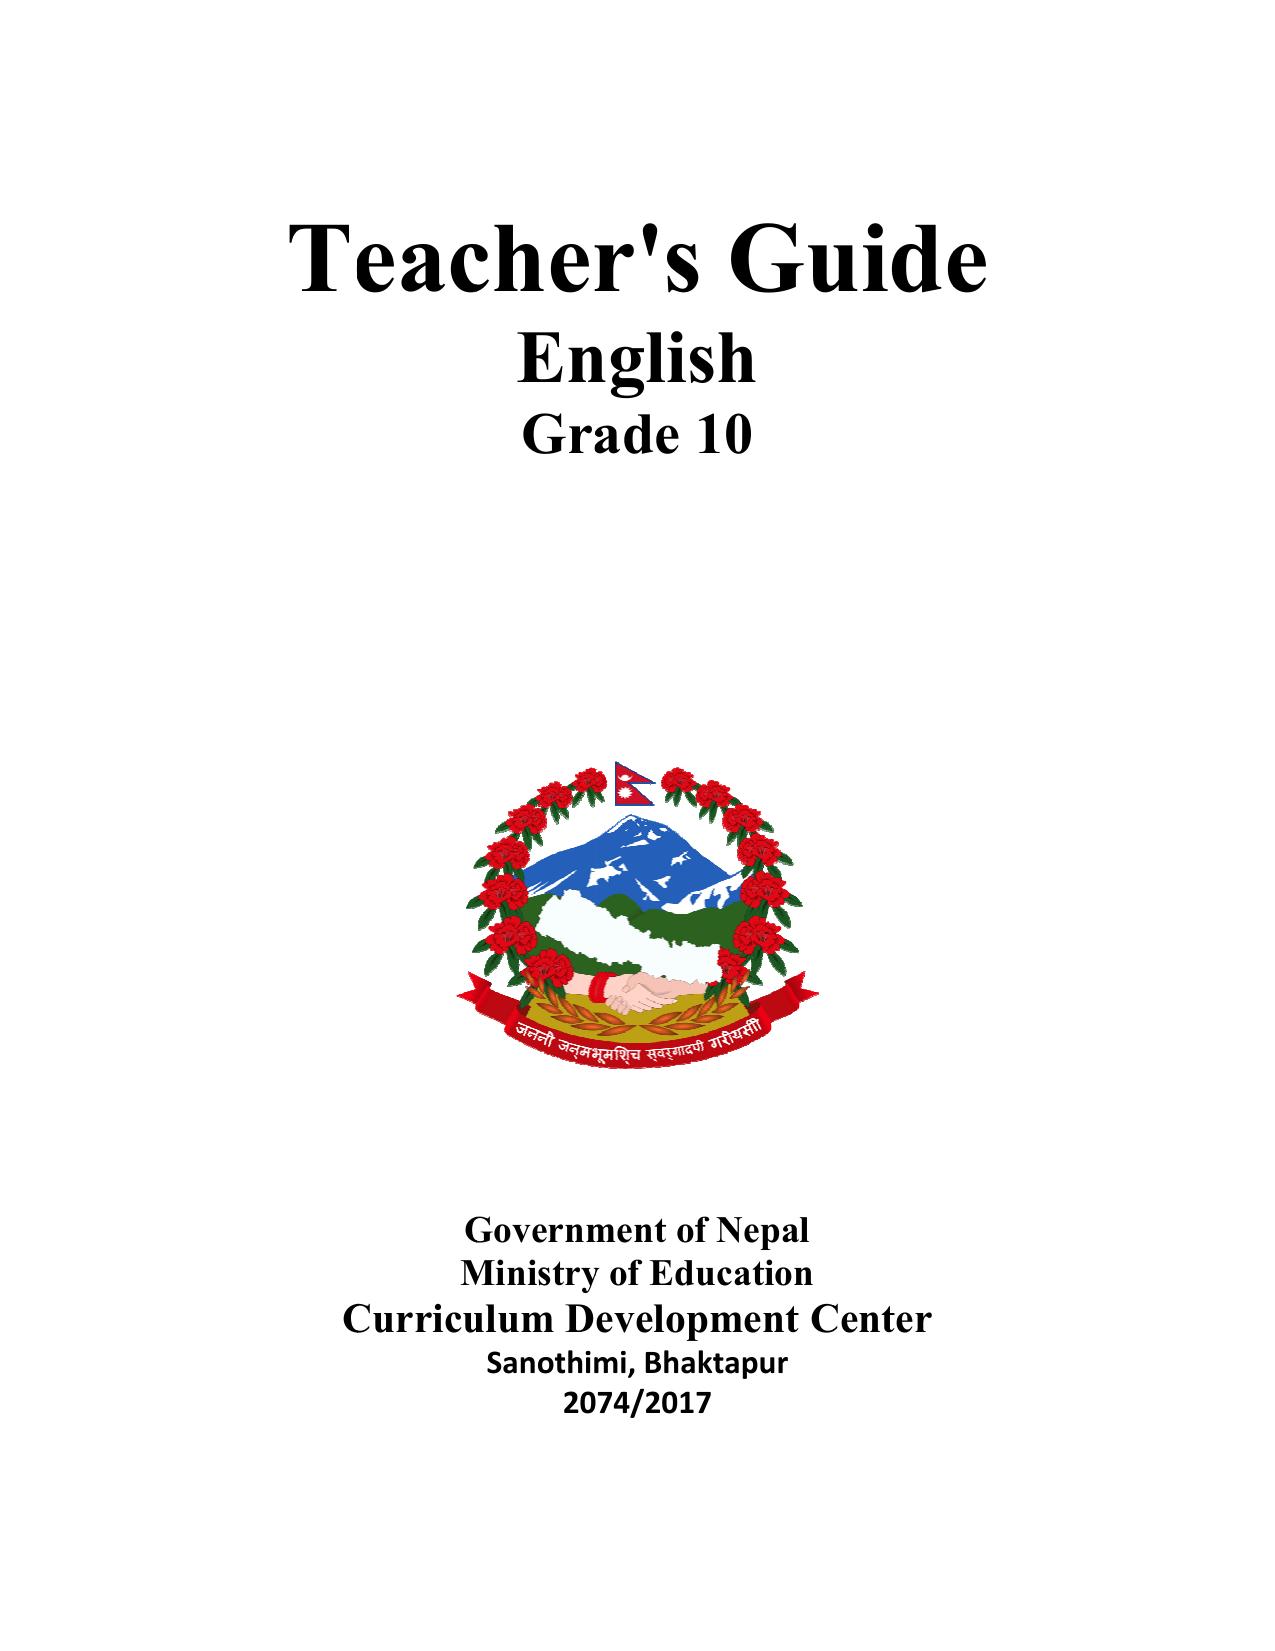 CDC 2017 - English Teachers Guide Grade 10